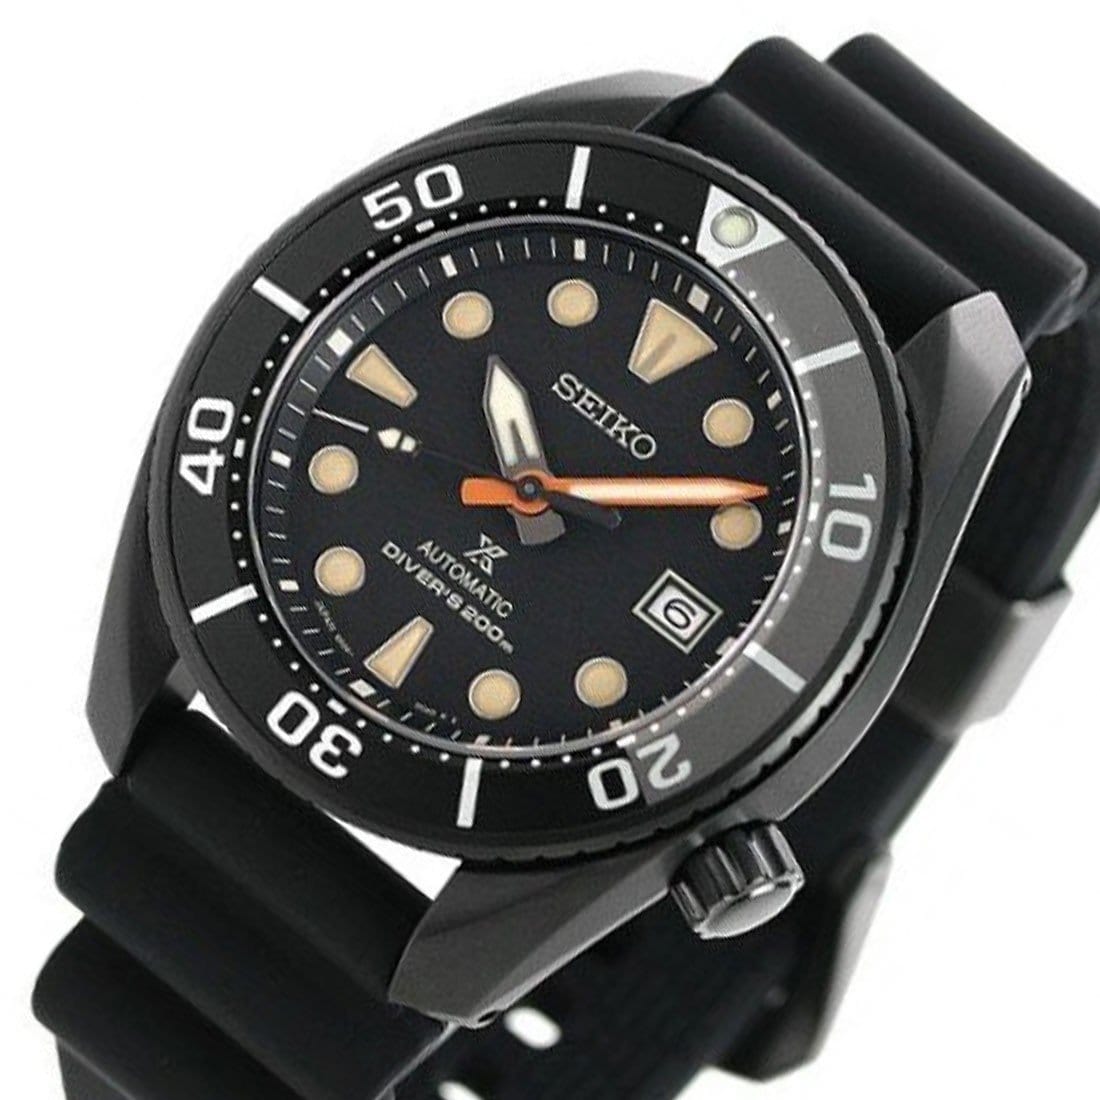 Seiko JDM Sumo Prospex Automatic 200M Analog Male Divers Watch SBDC095